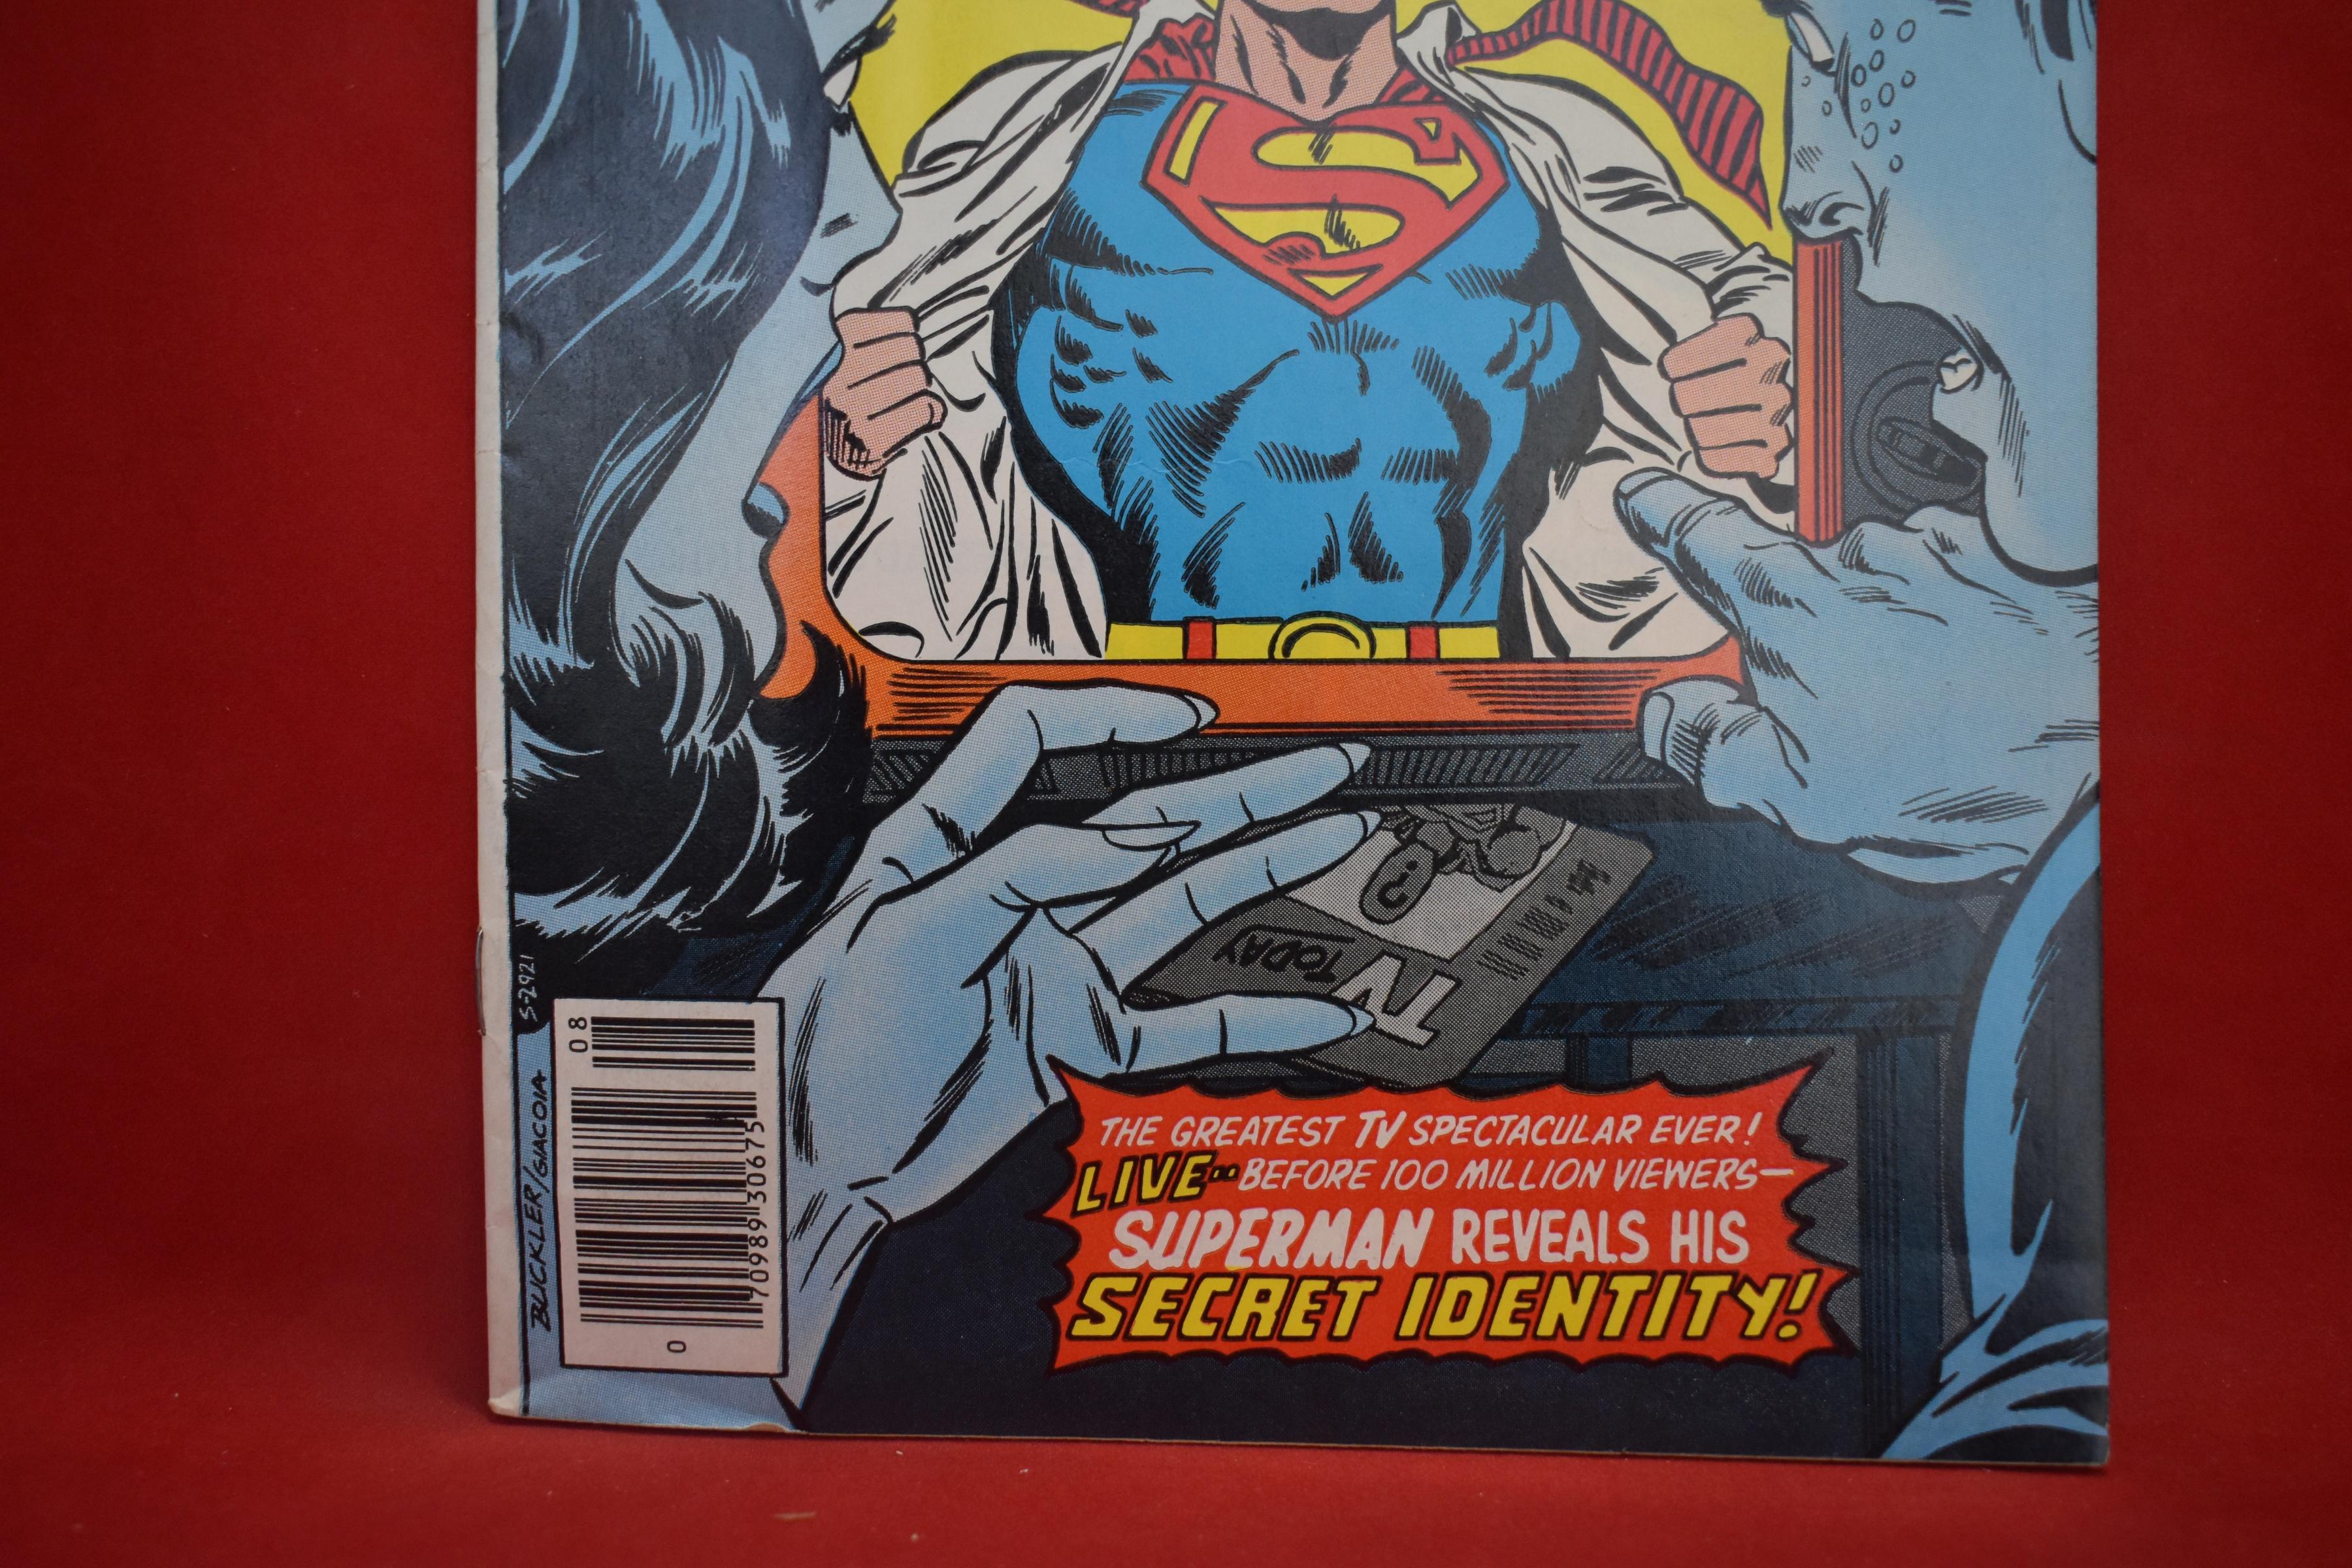 SUPERMAN #326 | A MILLION DOLLARS A MINUTE! | RICH BUCKLER - 1978